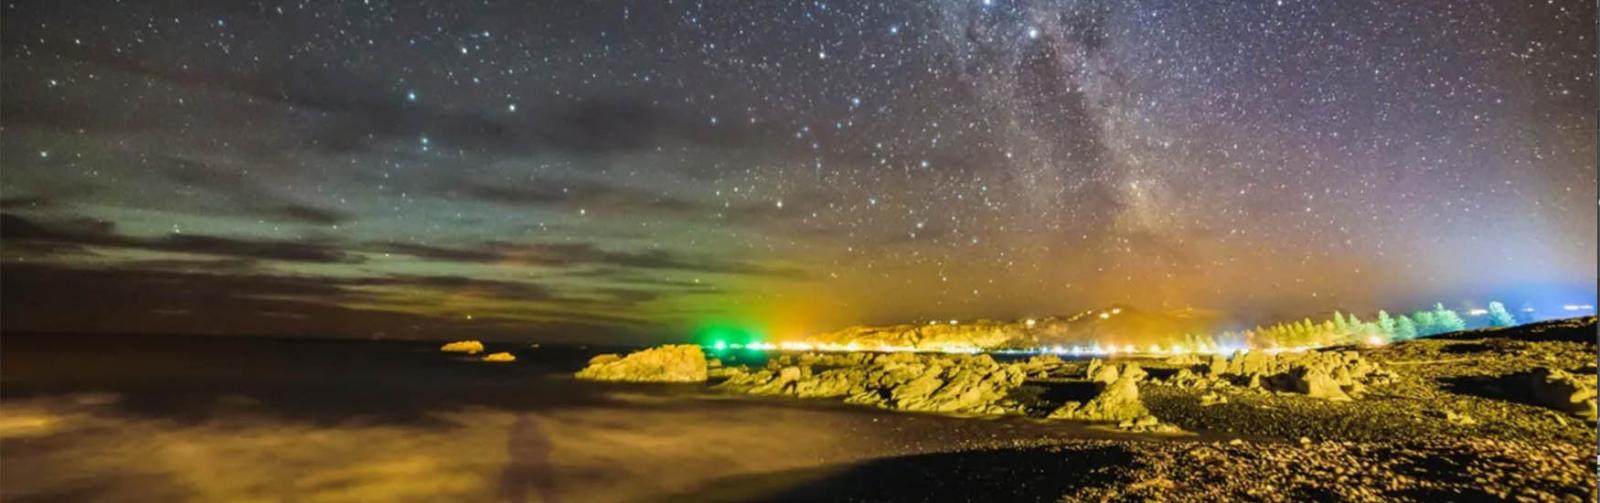 The Milky Way rises above Kaikoura Beach on New Zealand’s South Island